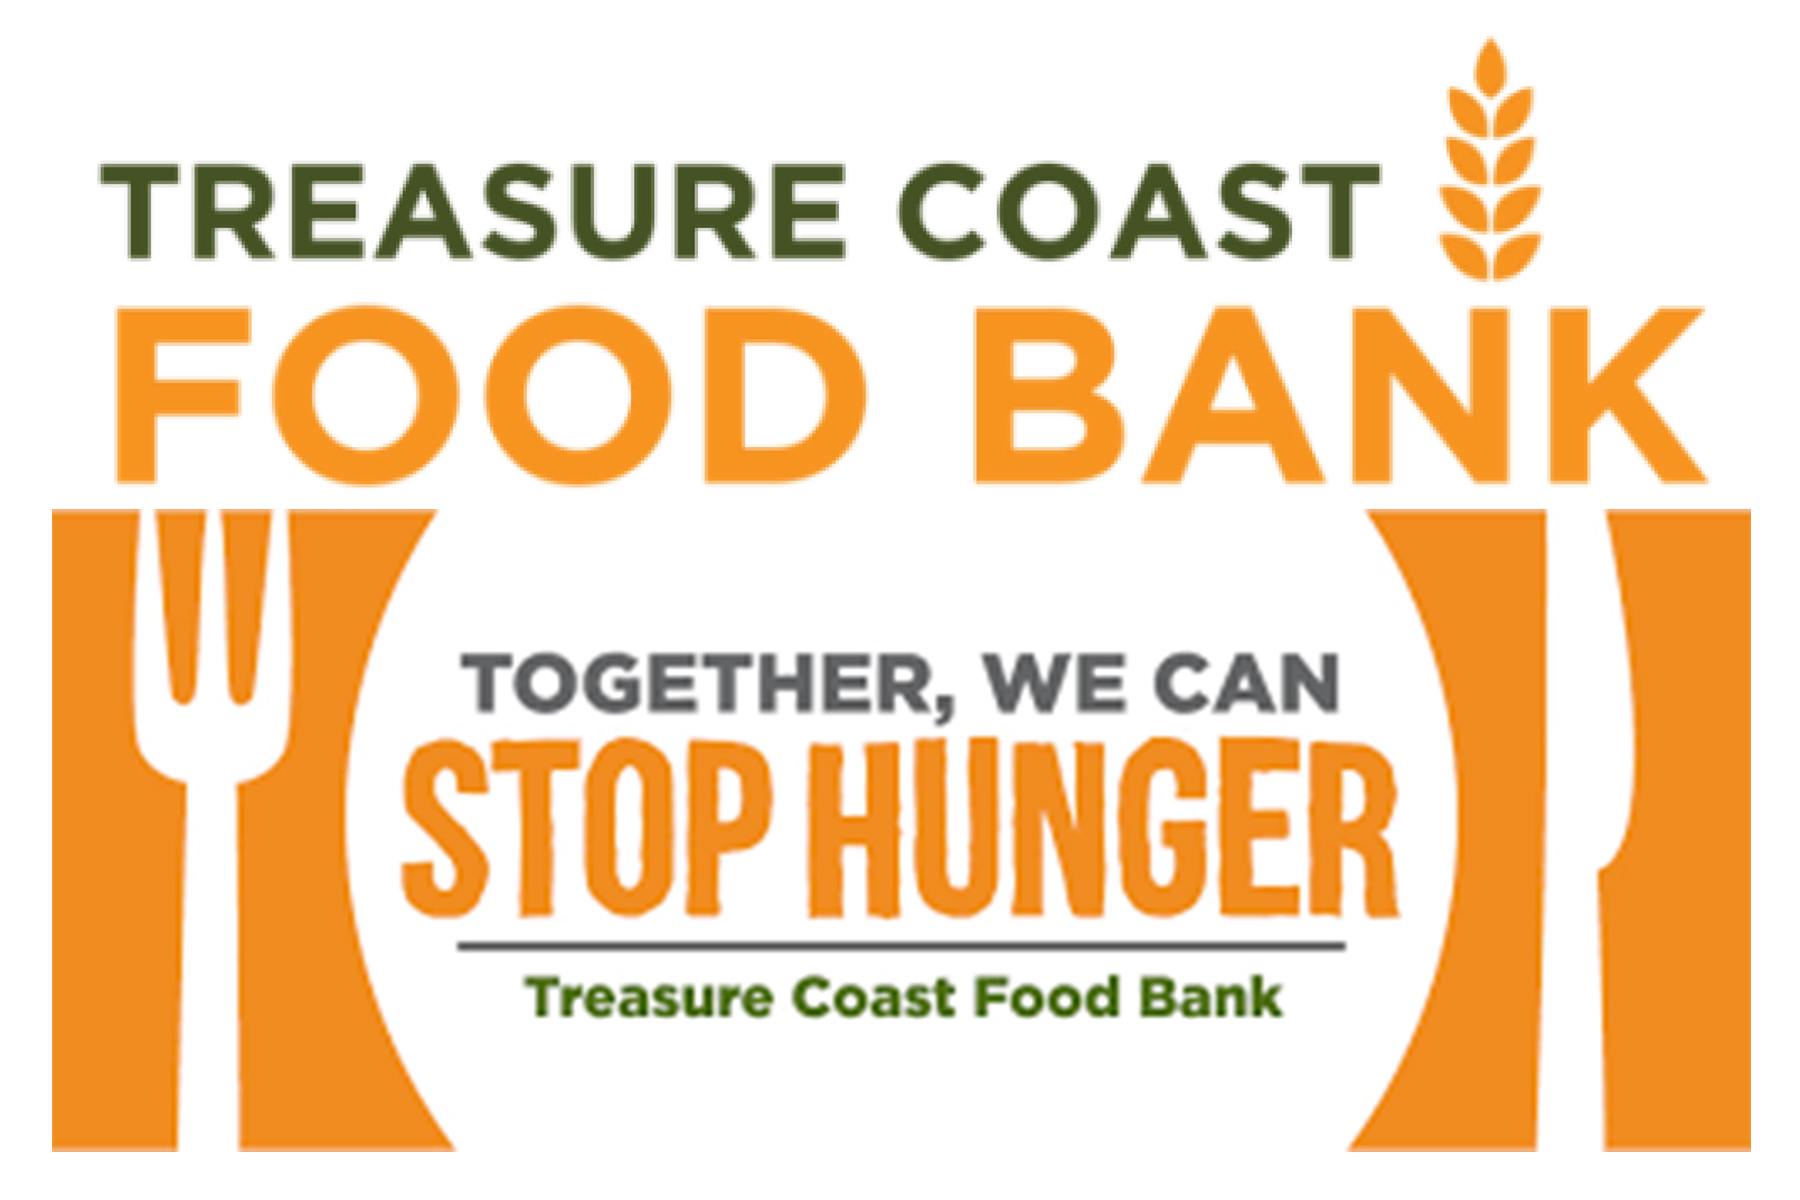 Treasure Coast Food Bank celebrates Older Americans Month